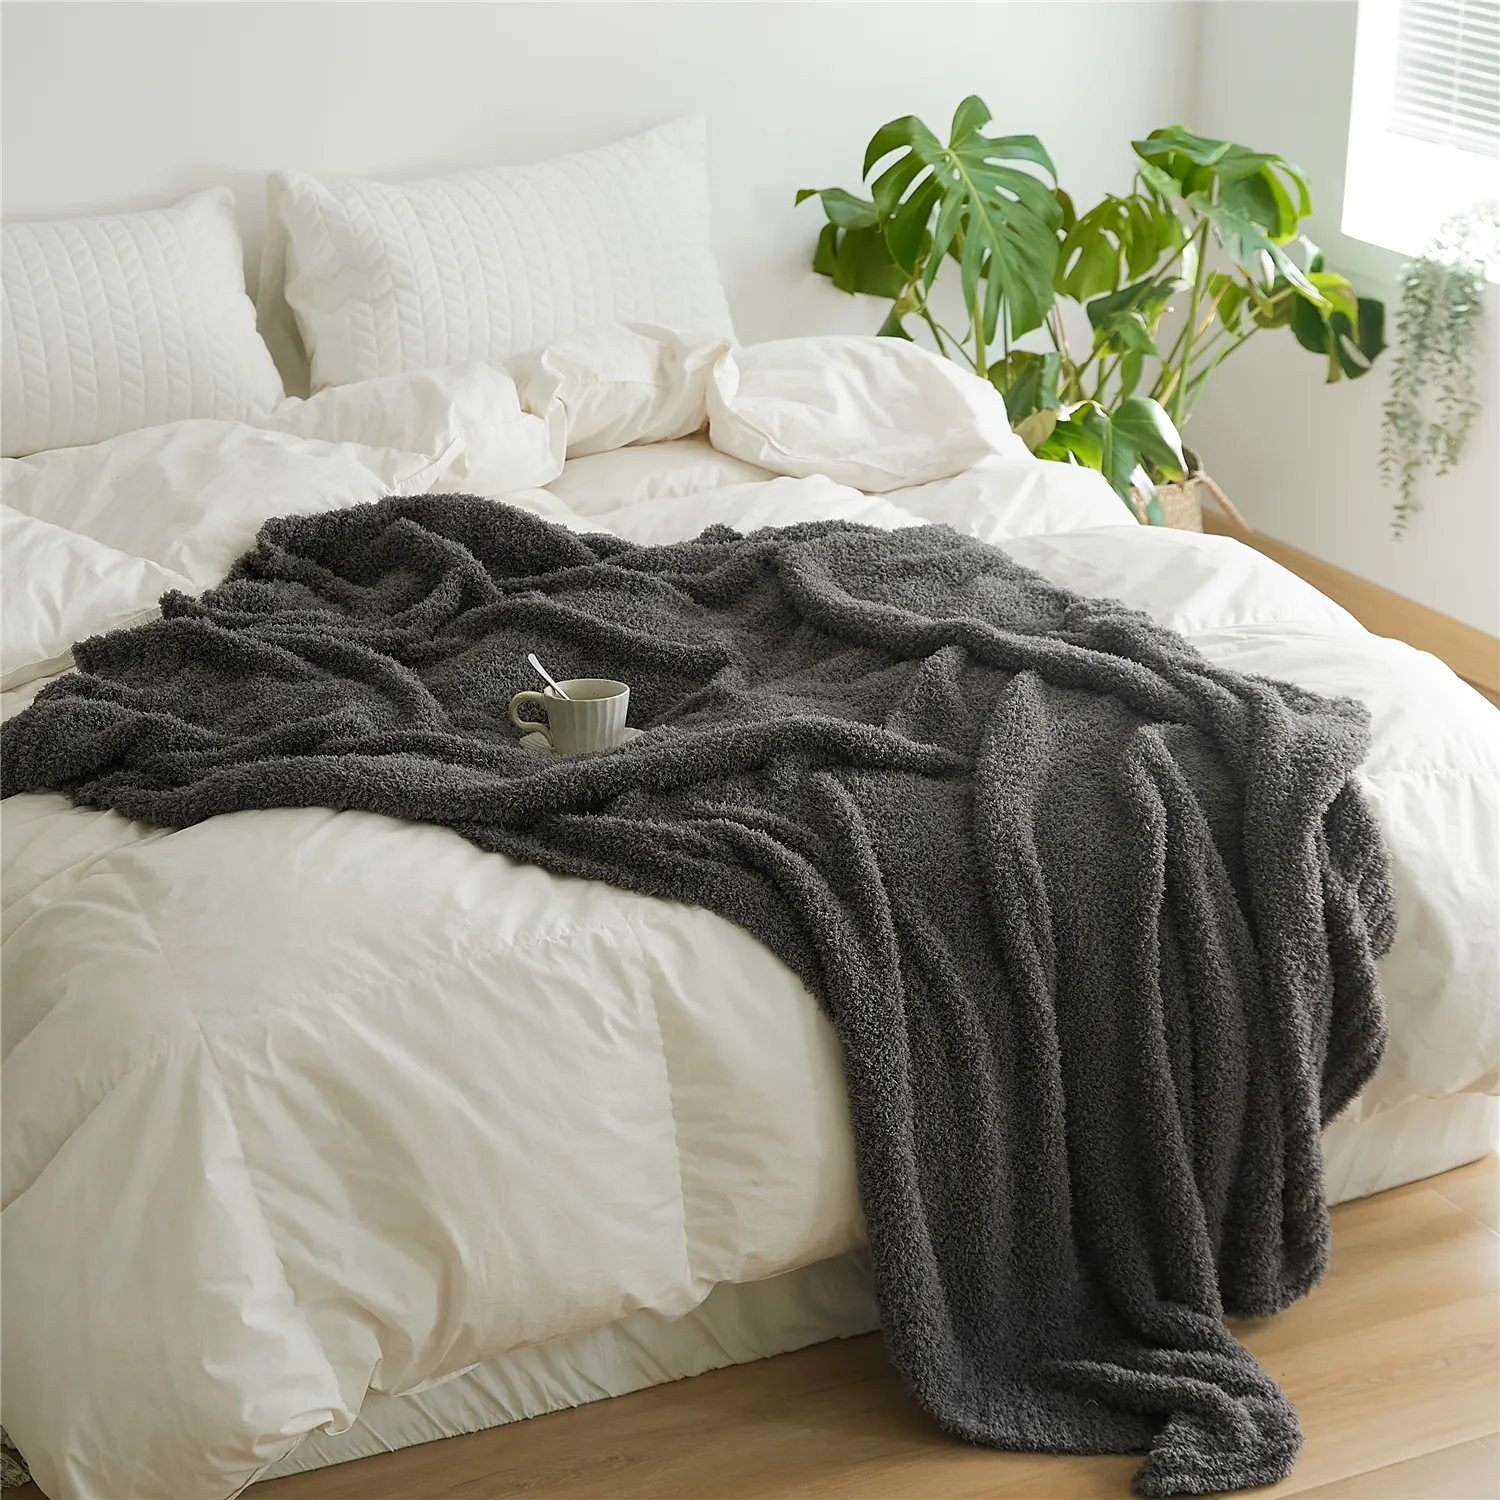 Oem Factory Wholesale Knitted Blanket Bedspread Microfiber Baby Kids Fluffy Waterwave Brushed Pure Cashmere Plaid Blanket